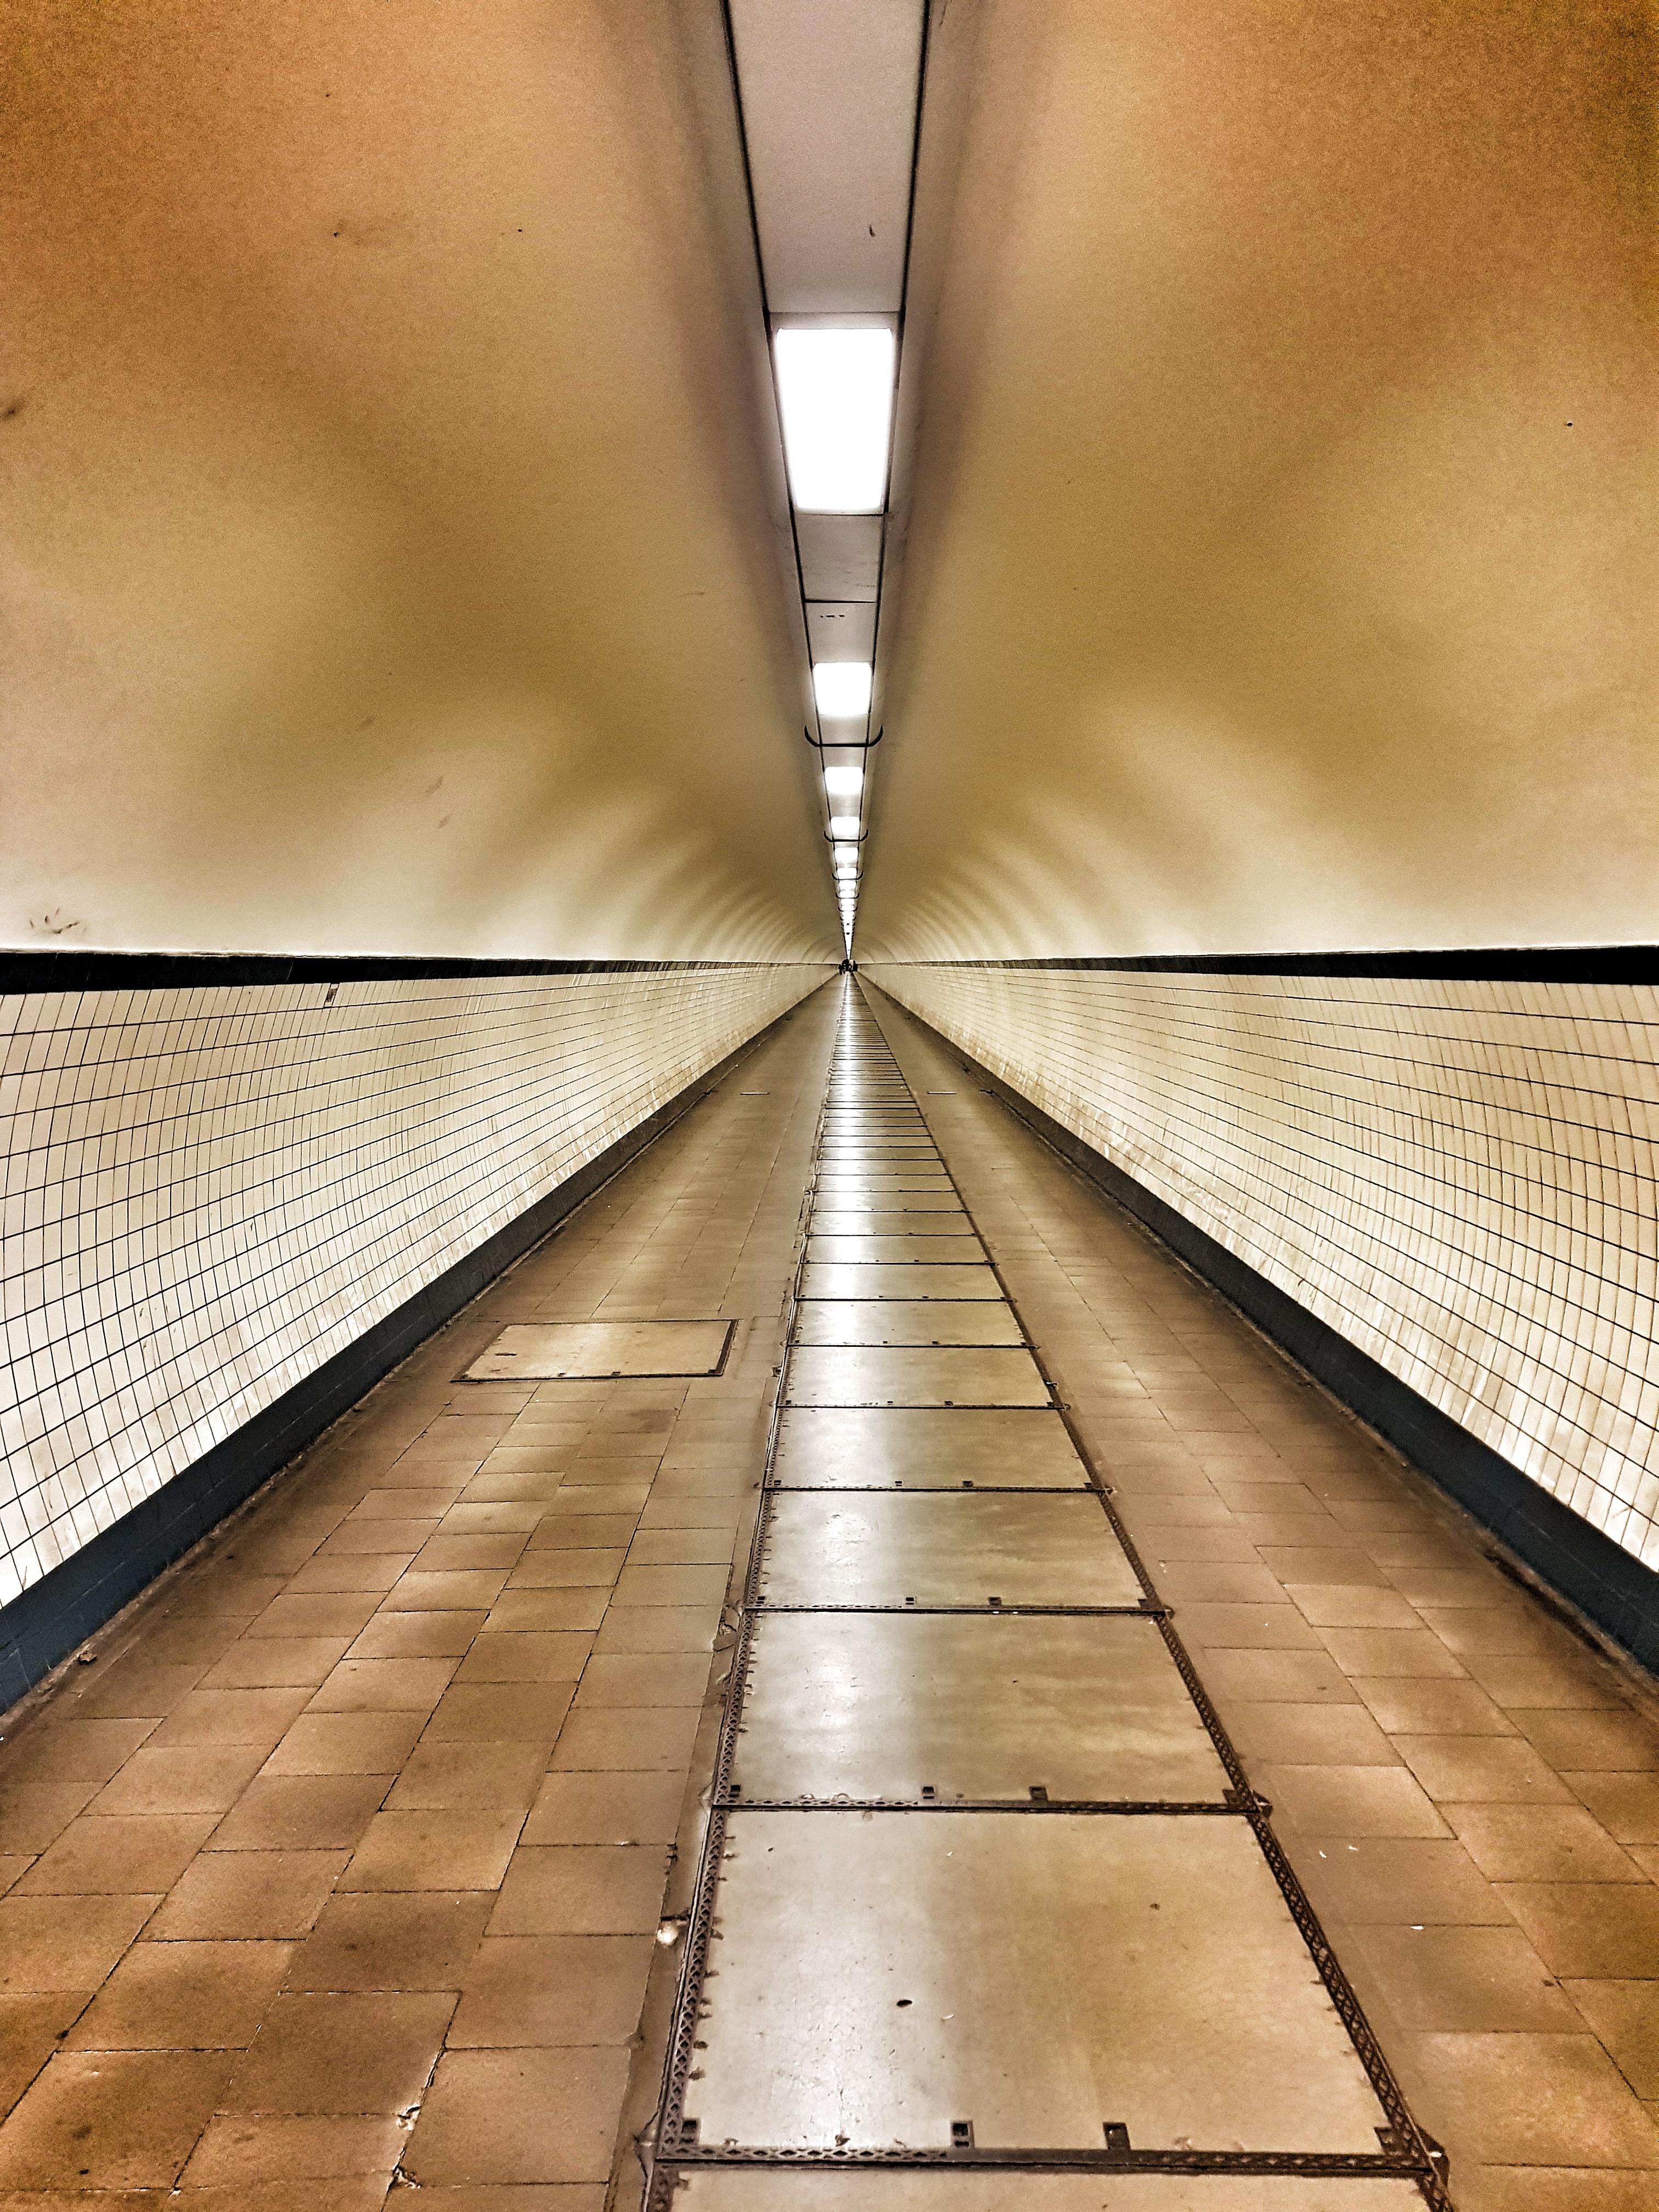 Endless tunnel taken in Antwerp. iPhone X